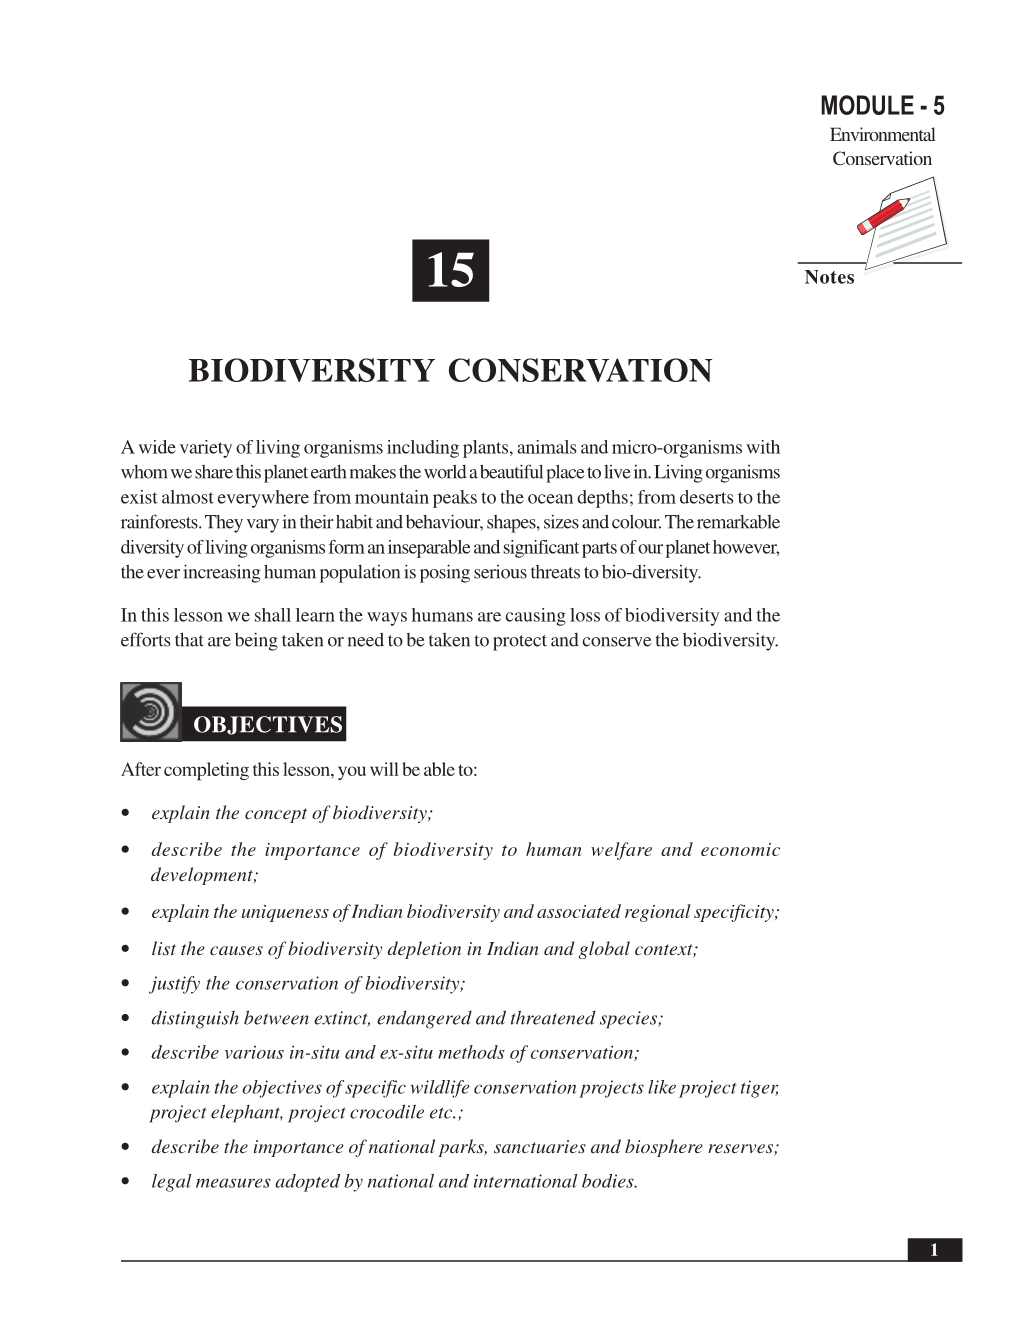 Biodiversity Conservation MODULE - 5 Environmental Conservation